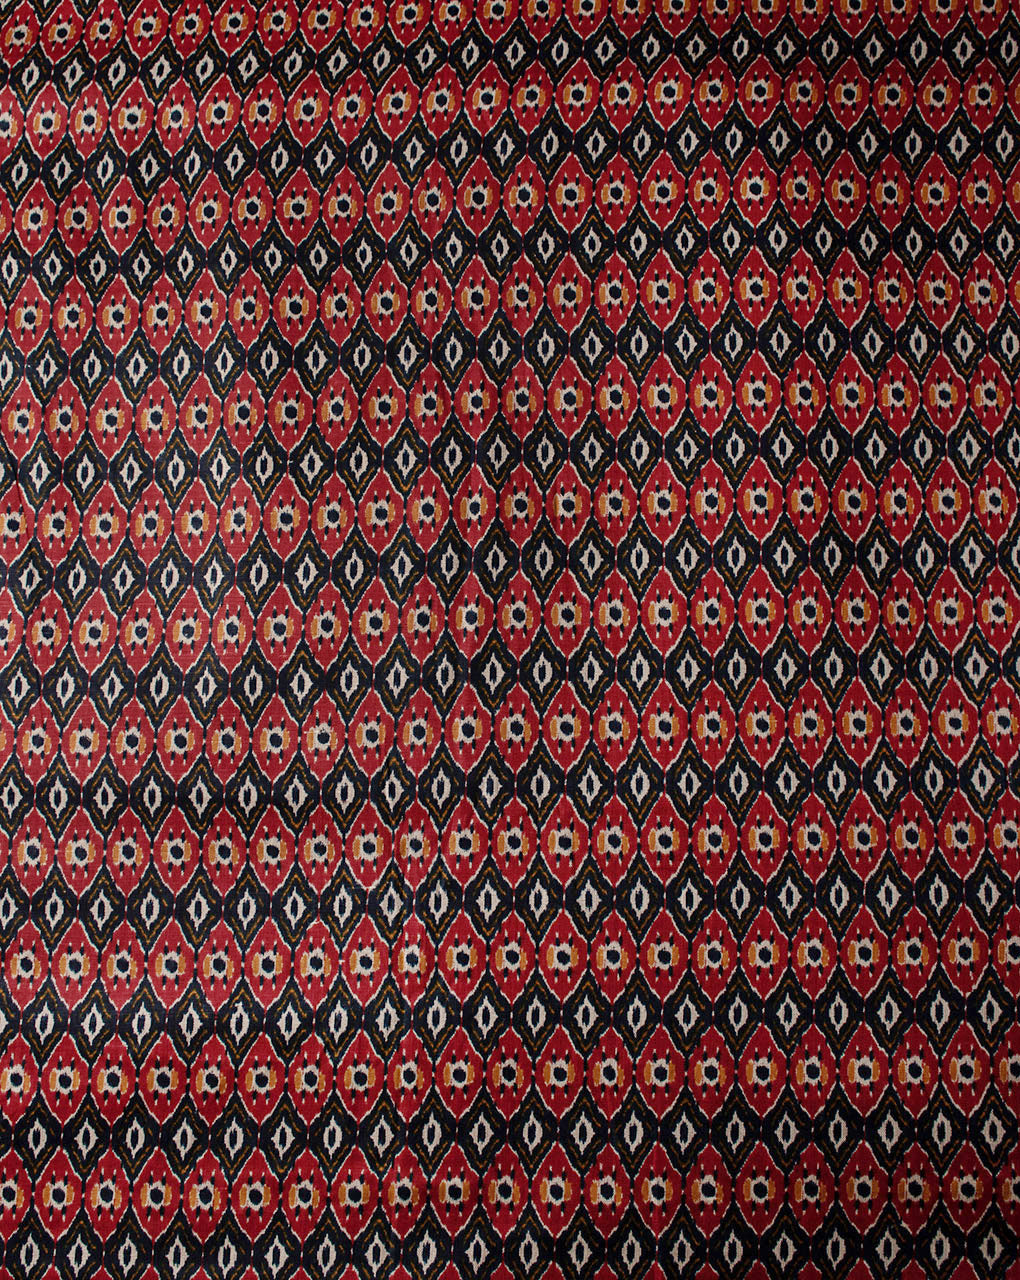 Foil Screen Print Flex Cotton Fabric - Fabriclore.com